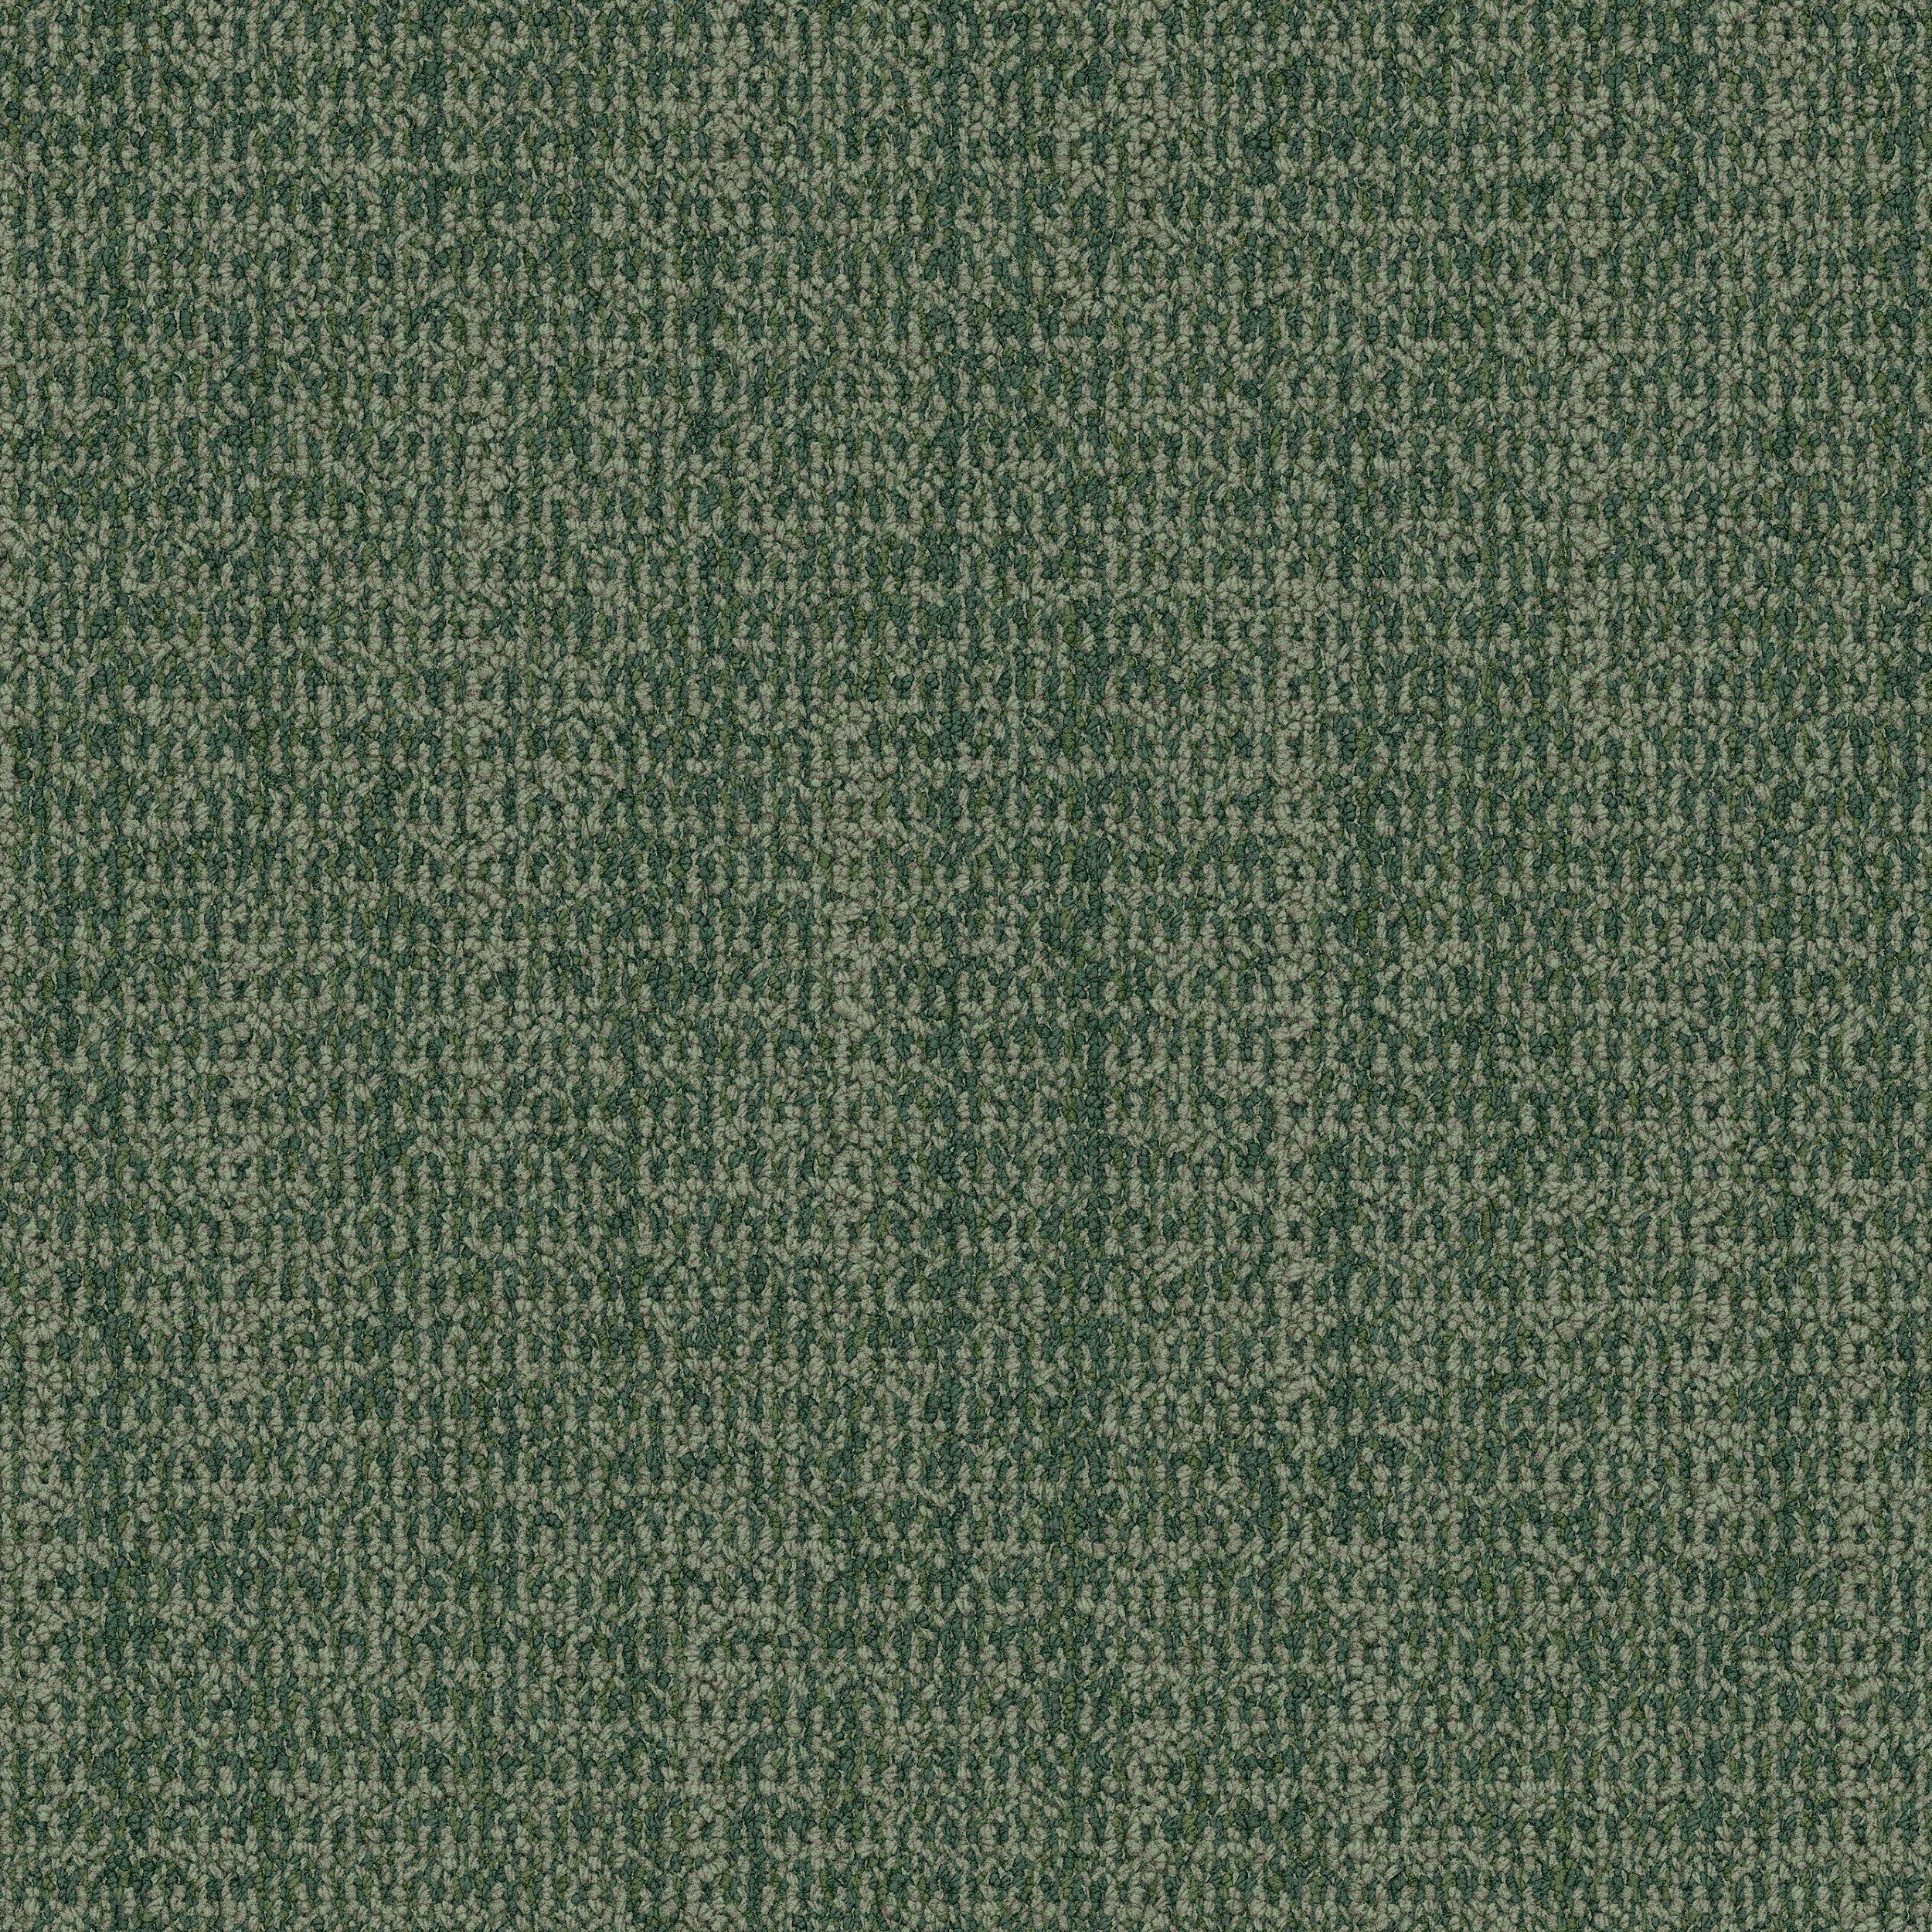 WG100 Carpet Tile In Forest número de imagen 1